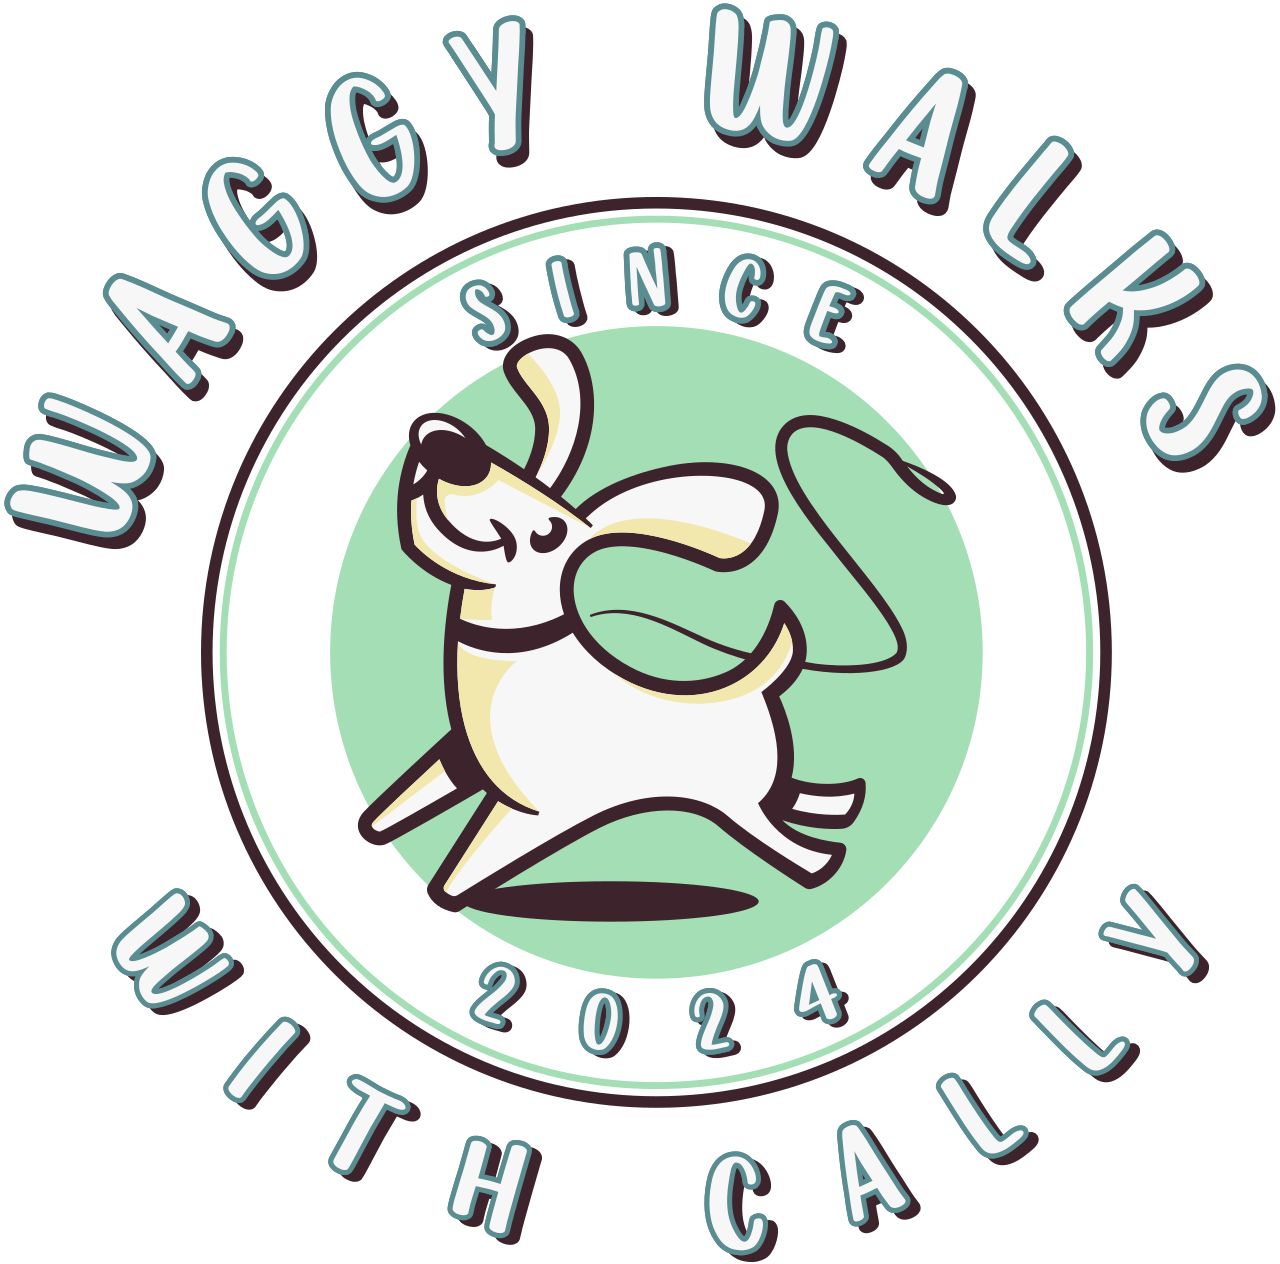 Waggy walks 's logo